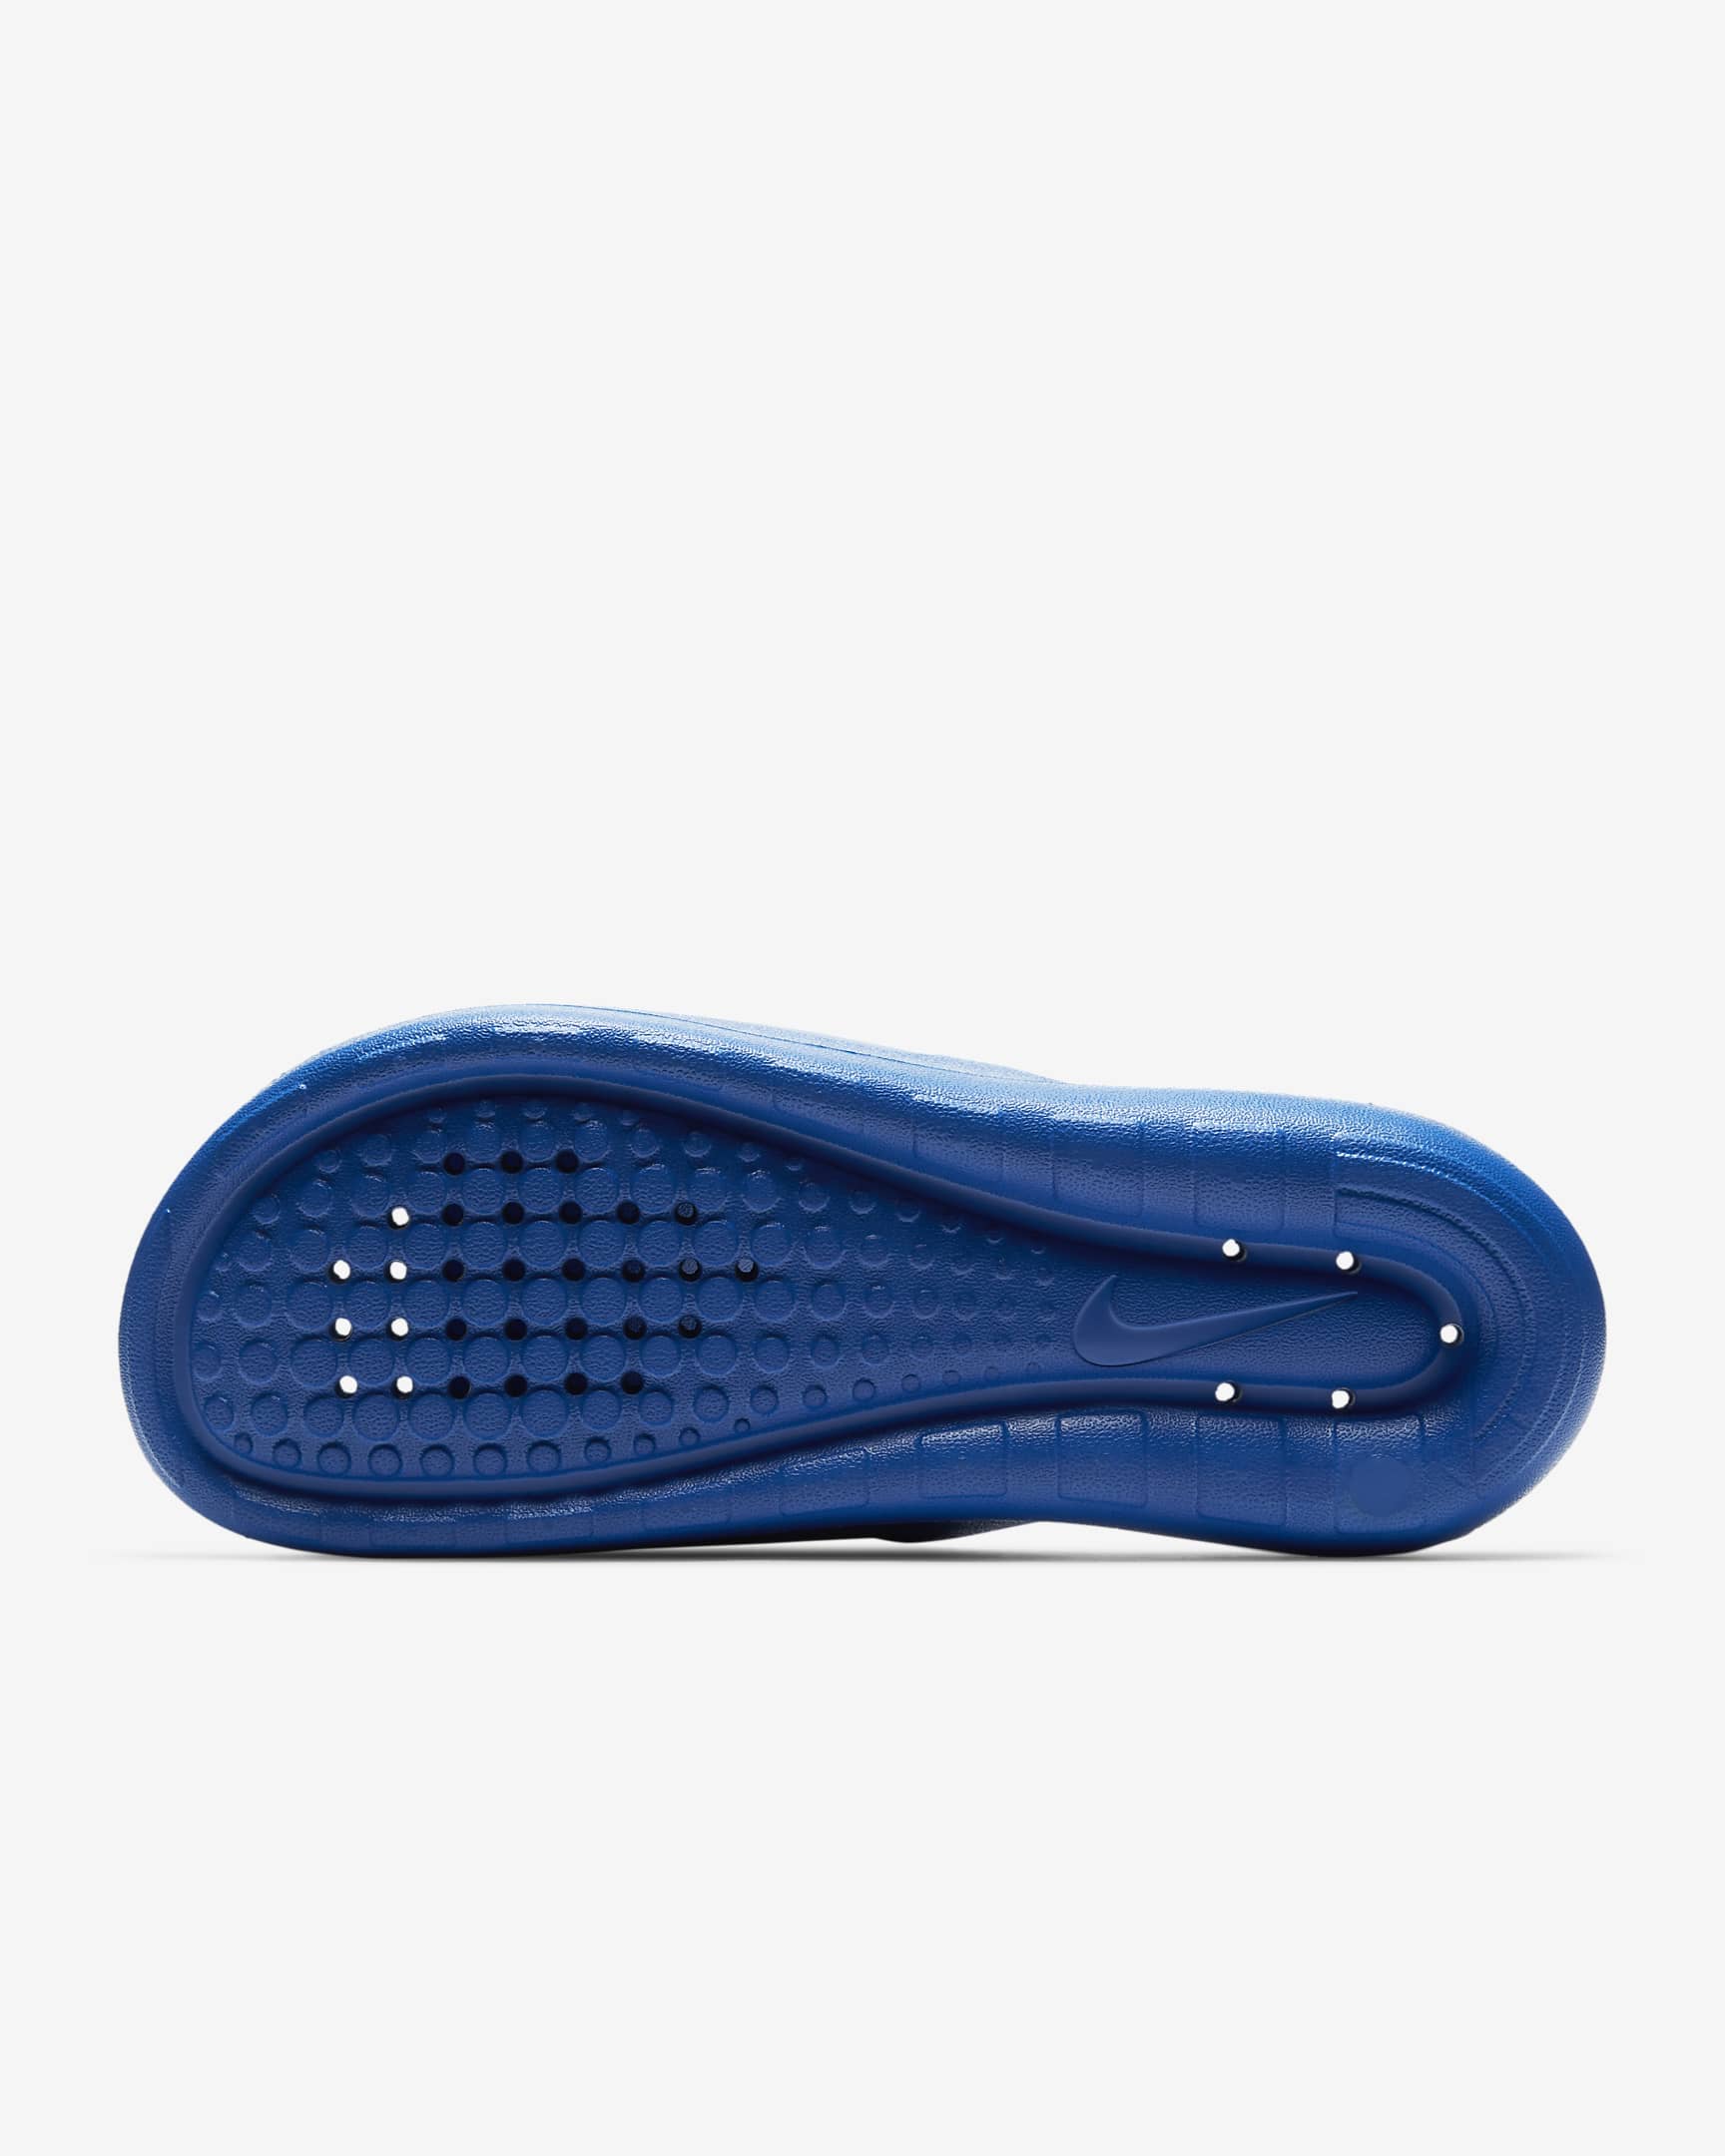 Nike Victori One Men's Shower Slides - Game Royal/Game Royal/White